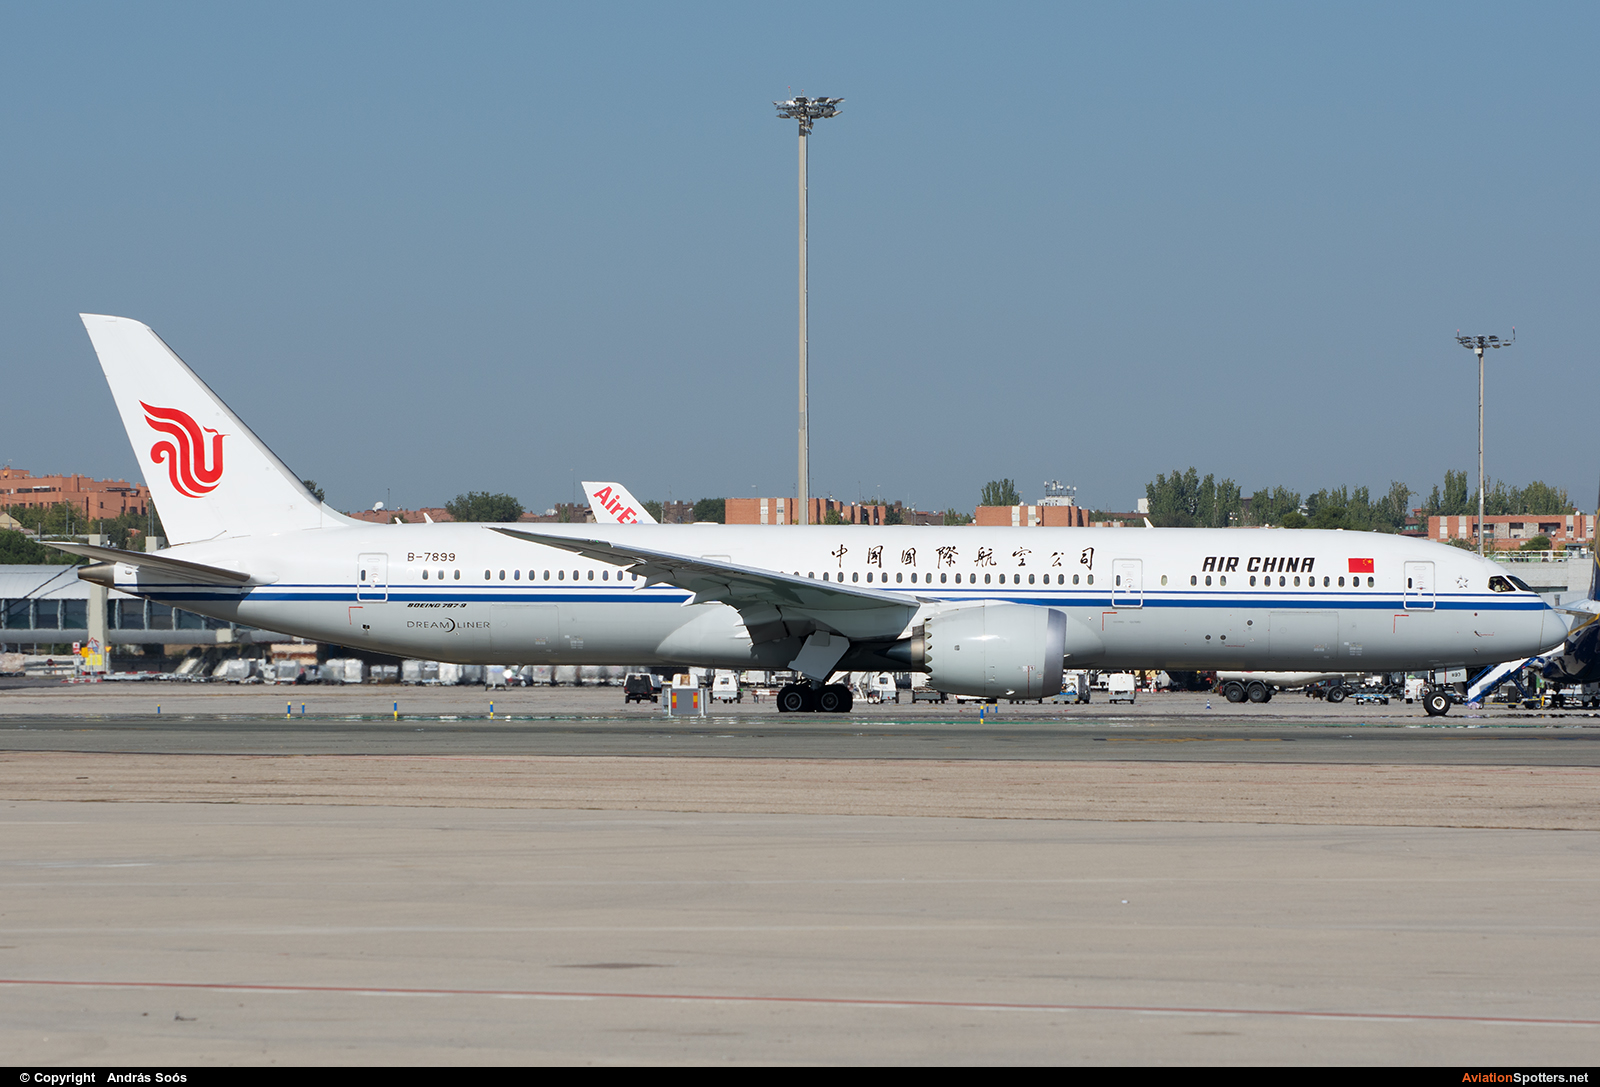 Air China  -  787-9 Dreamliner  (B-7899) By András Soós (sas1965)